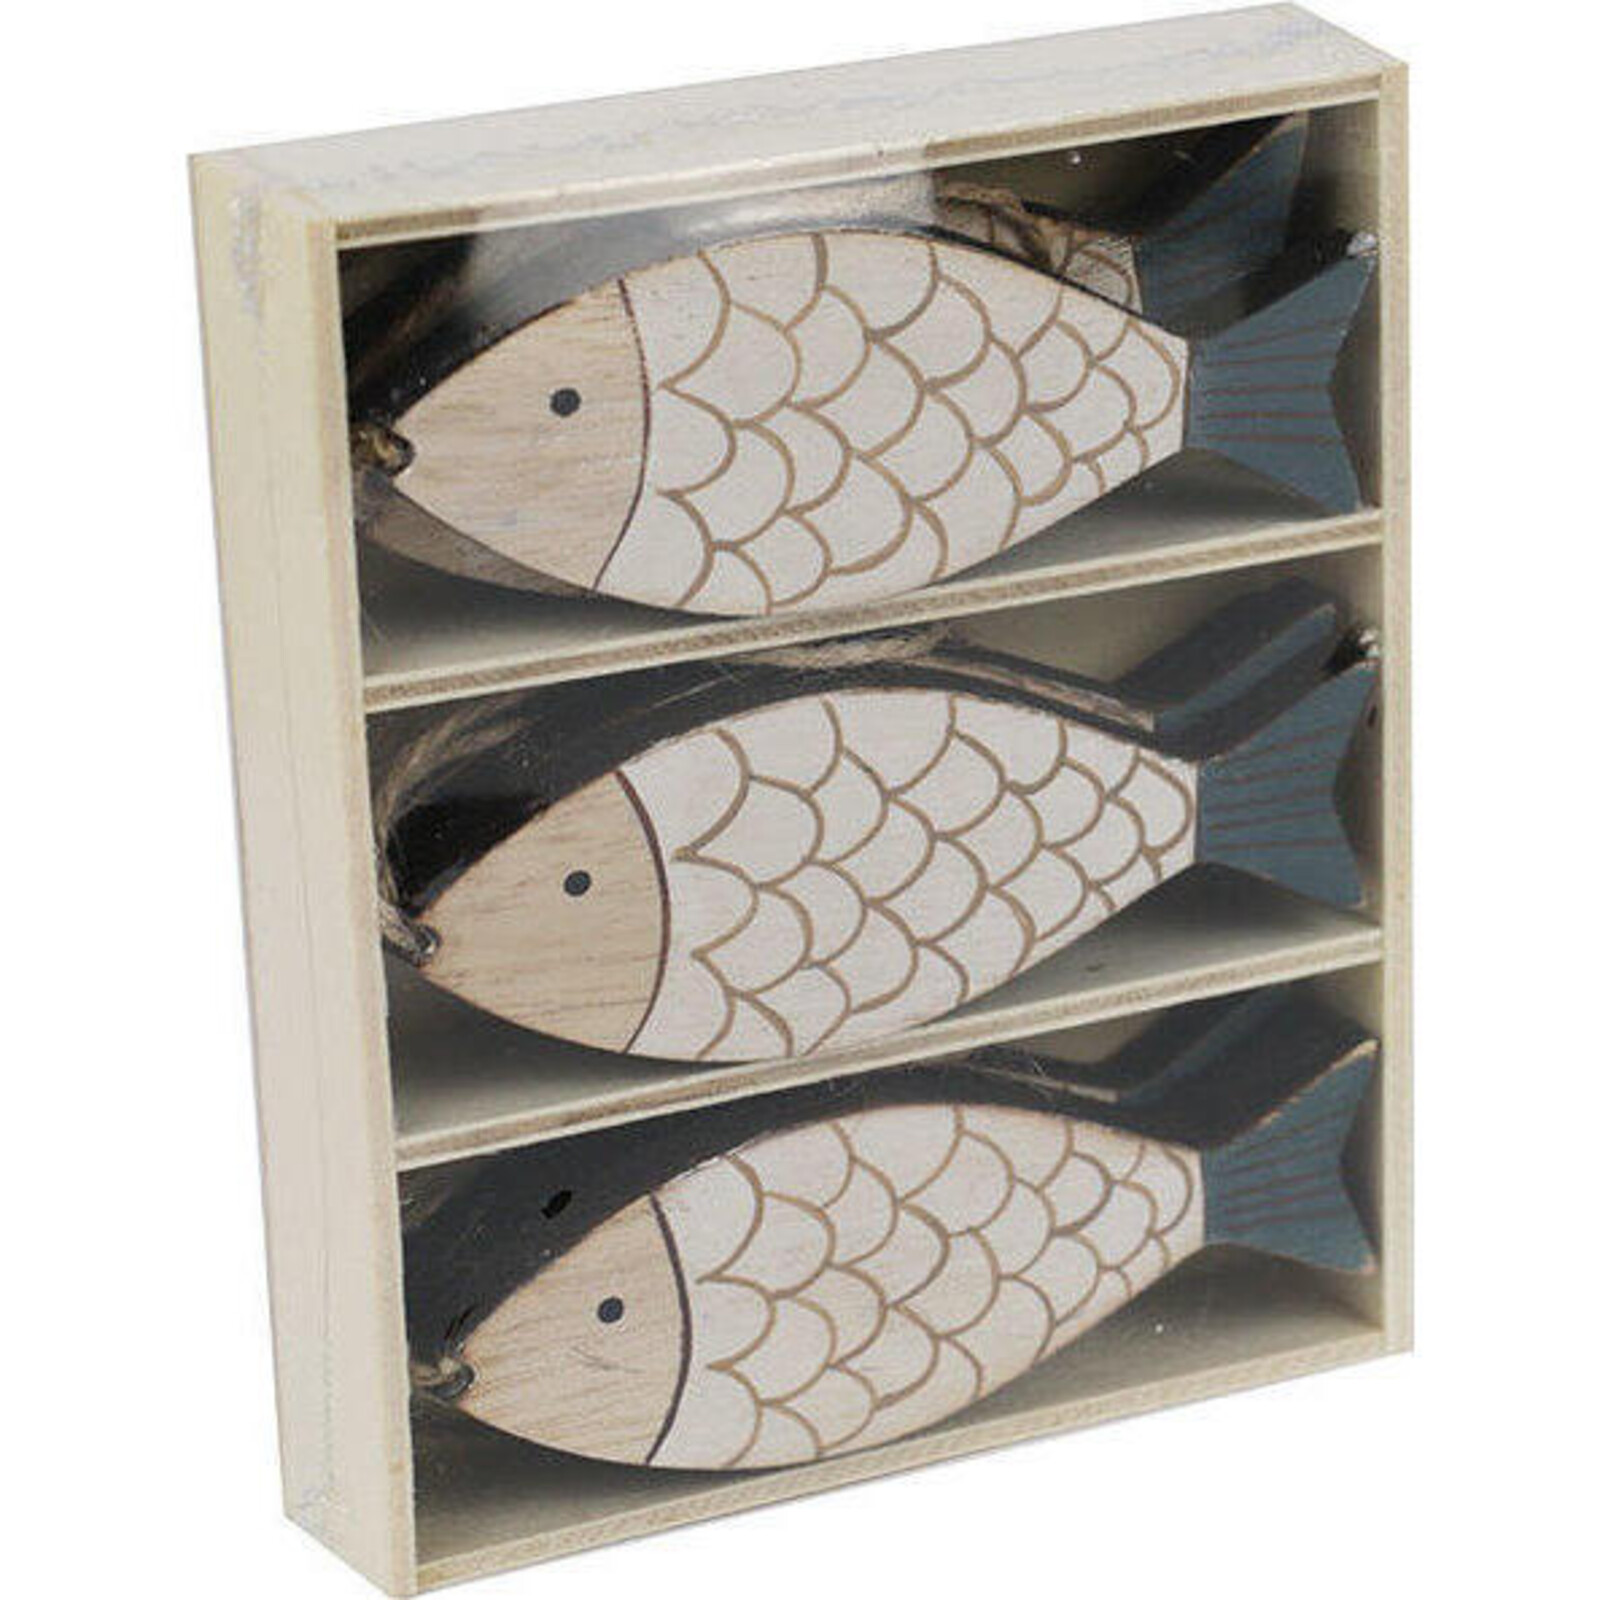 Box Fish Scales Set/9